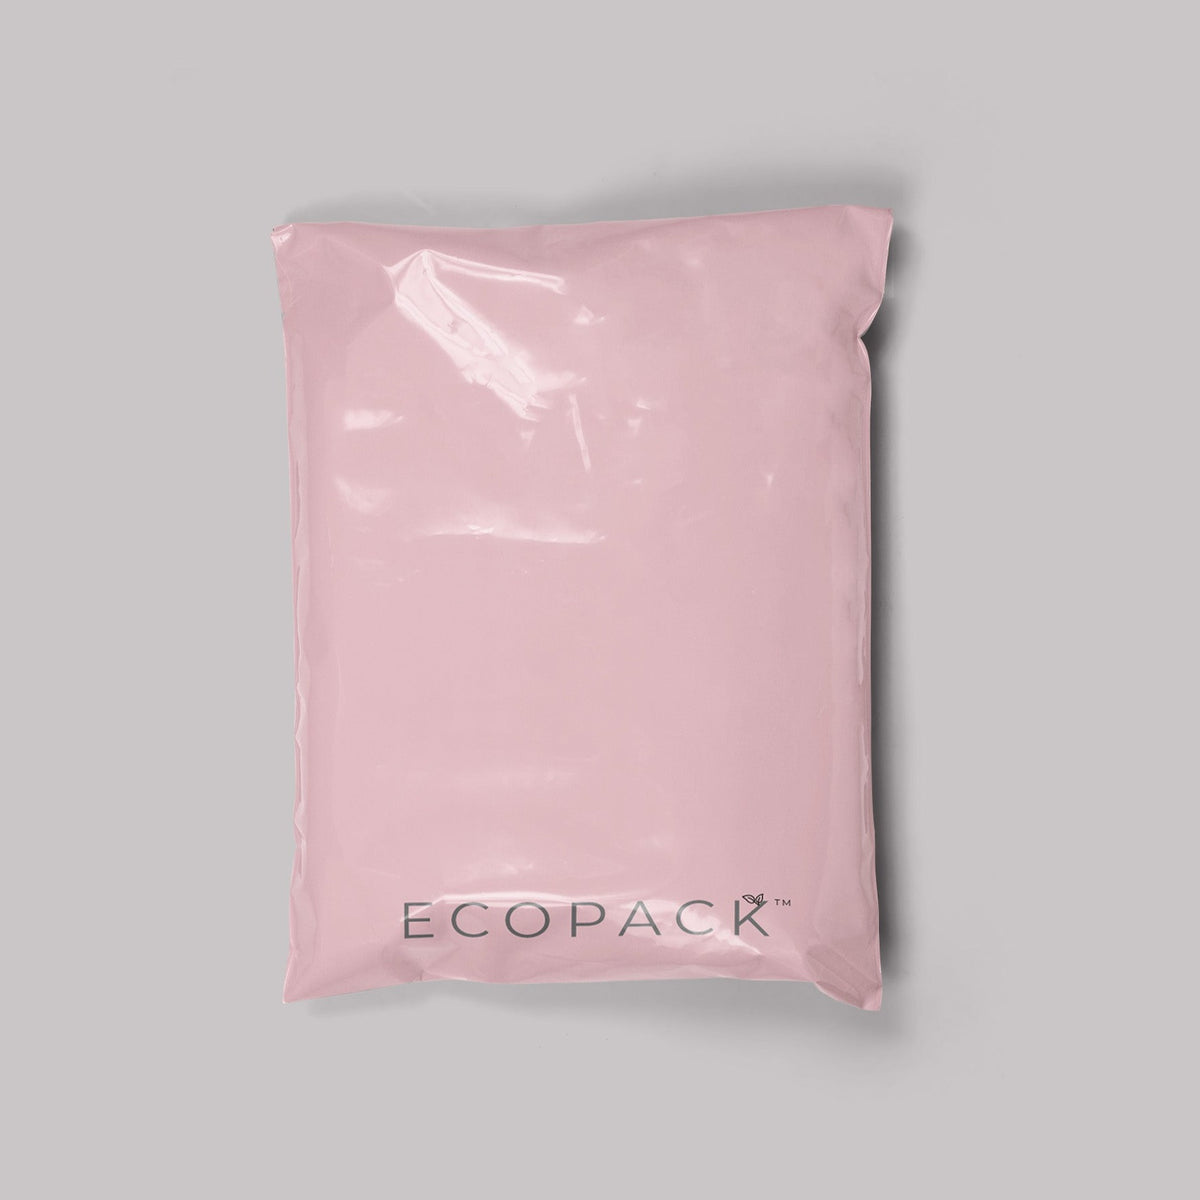 E C O P A C K™ (Pink)